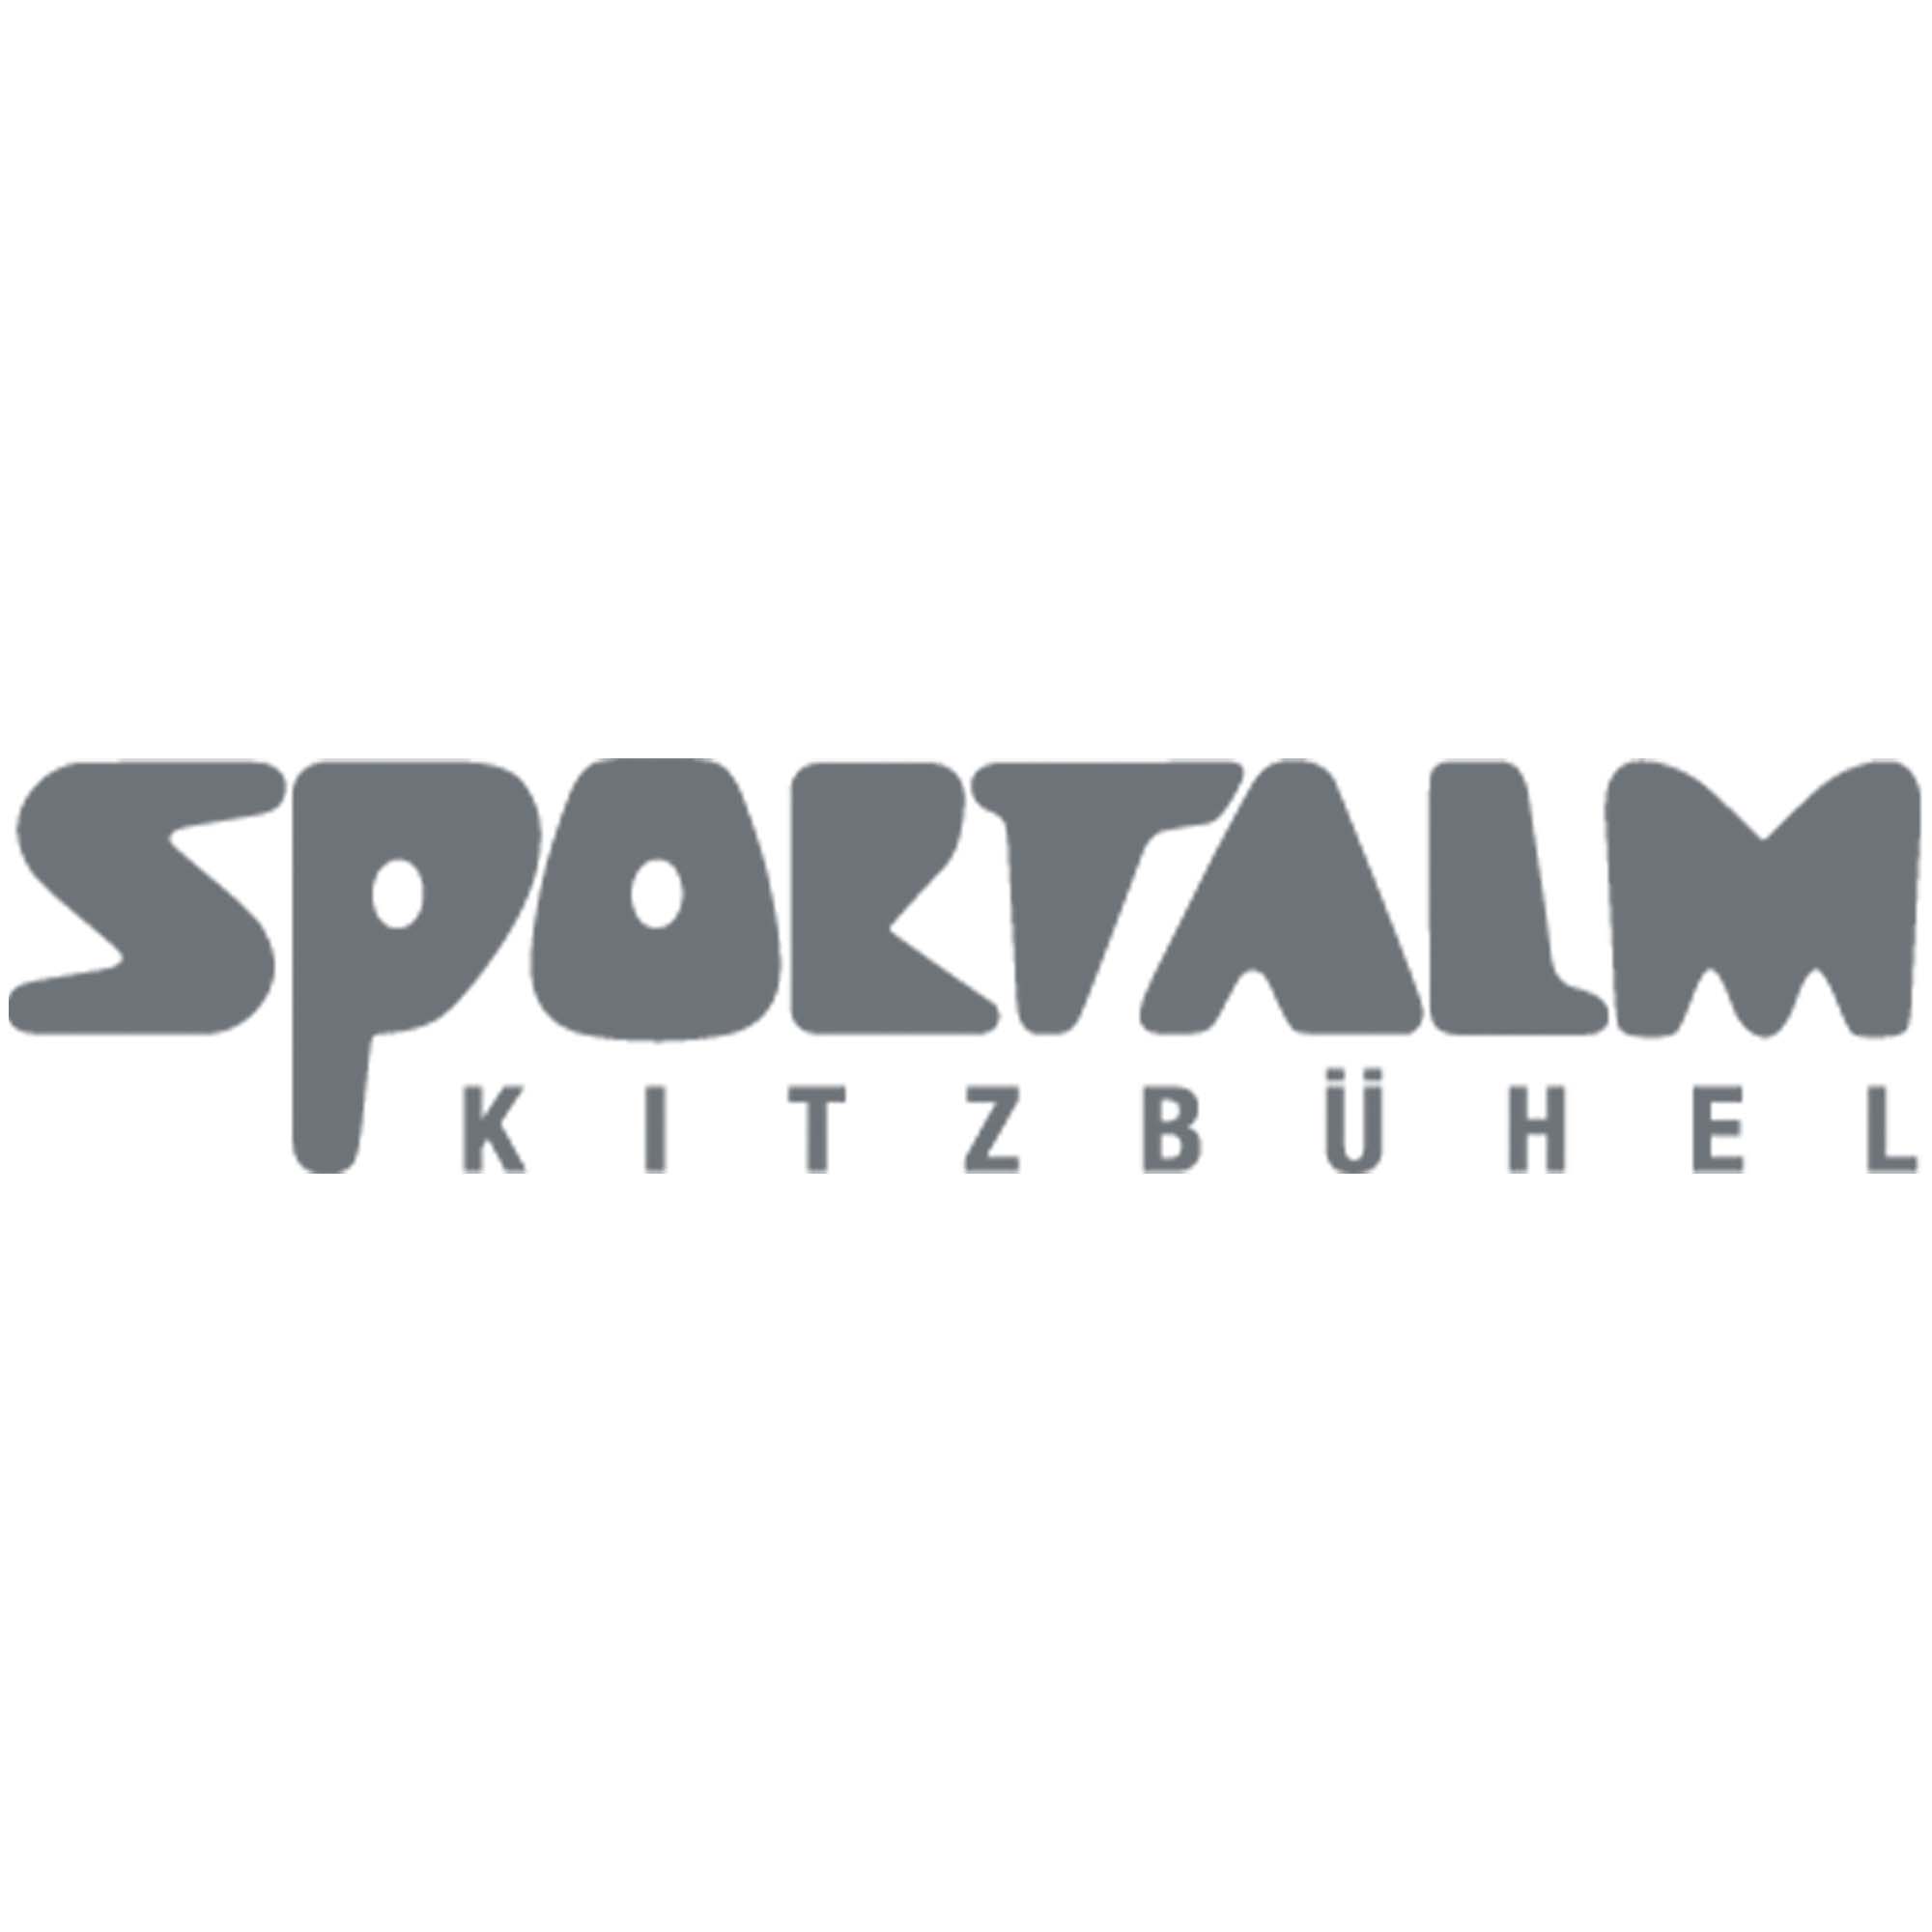 Sportalm